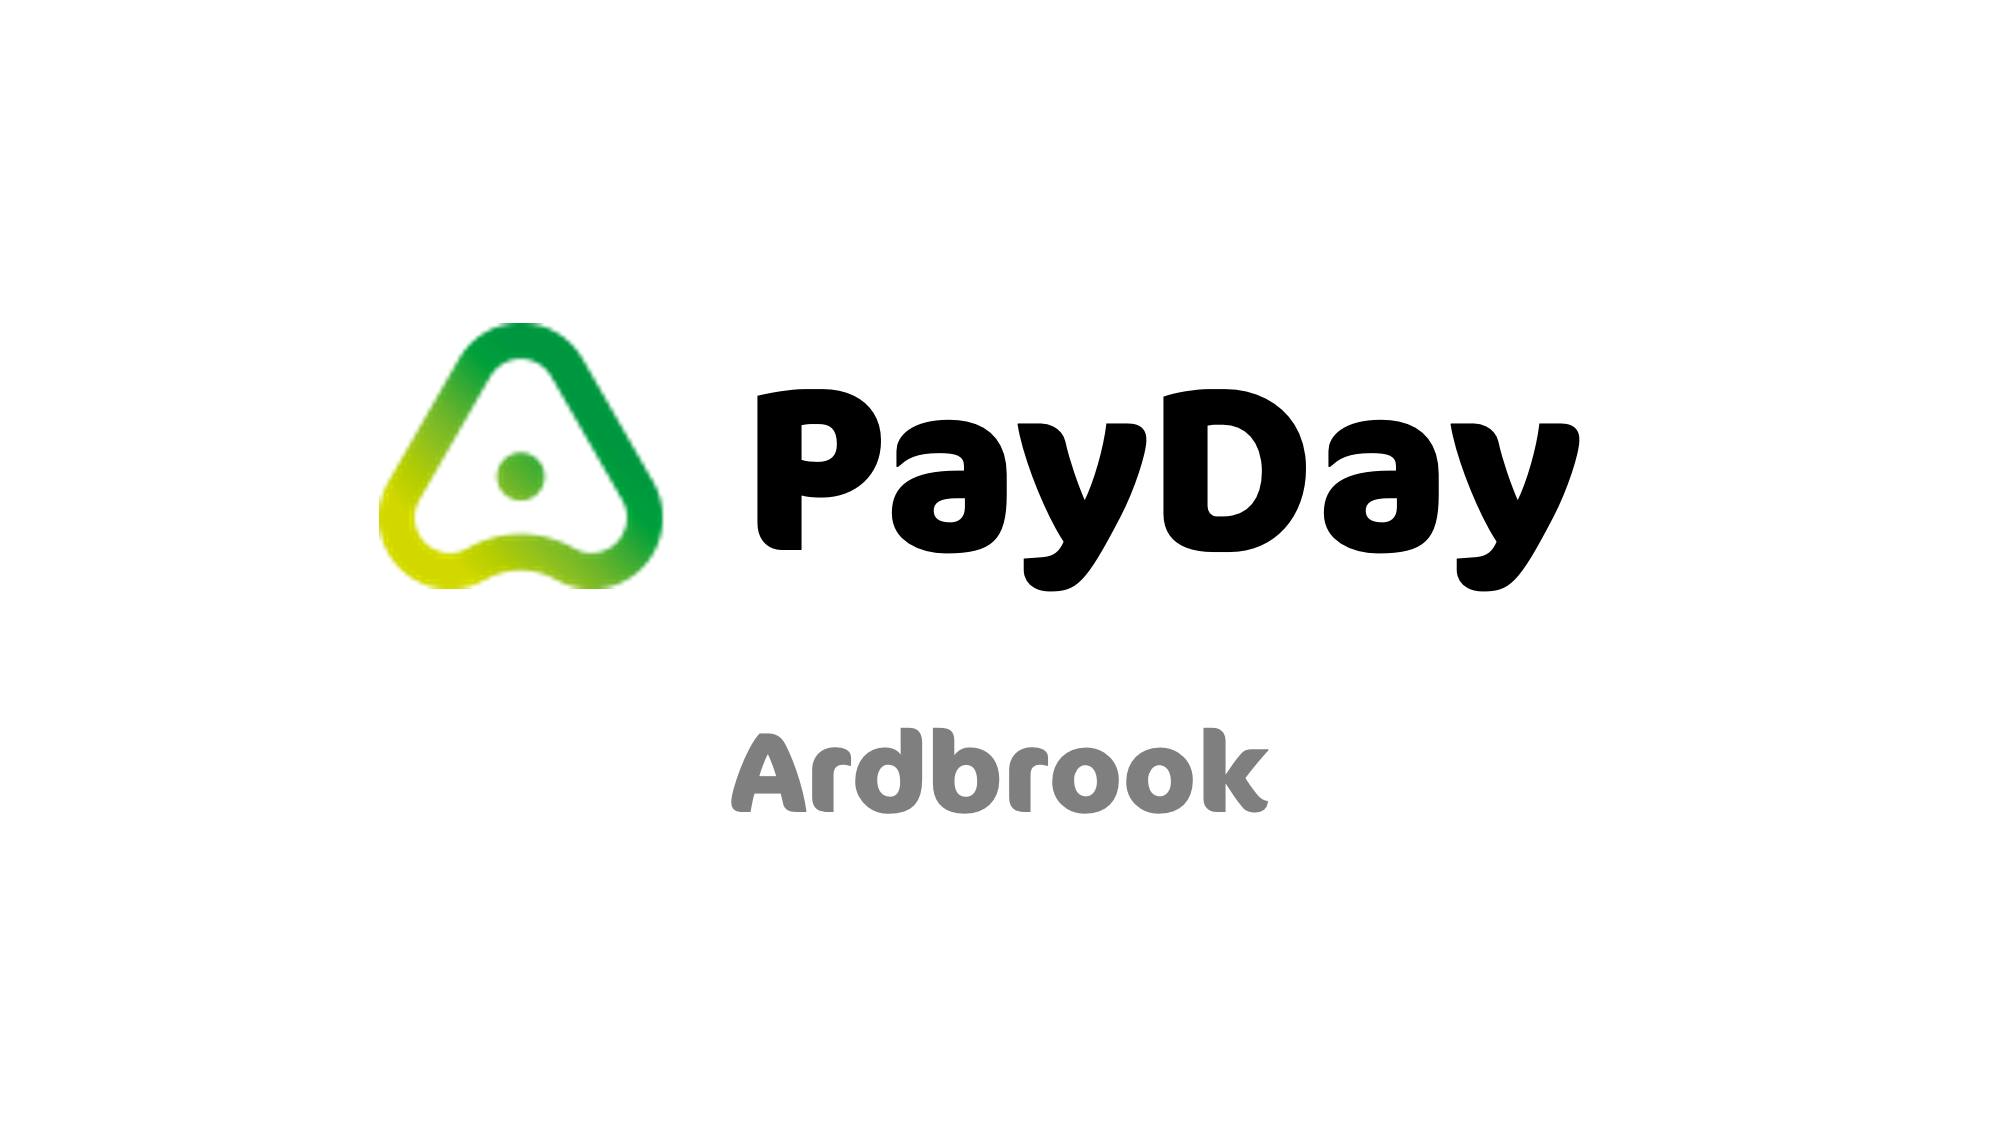 PayDay by Ardbrook logo